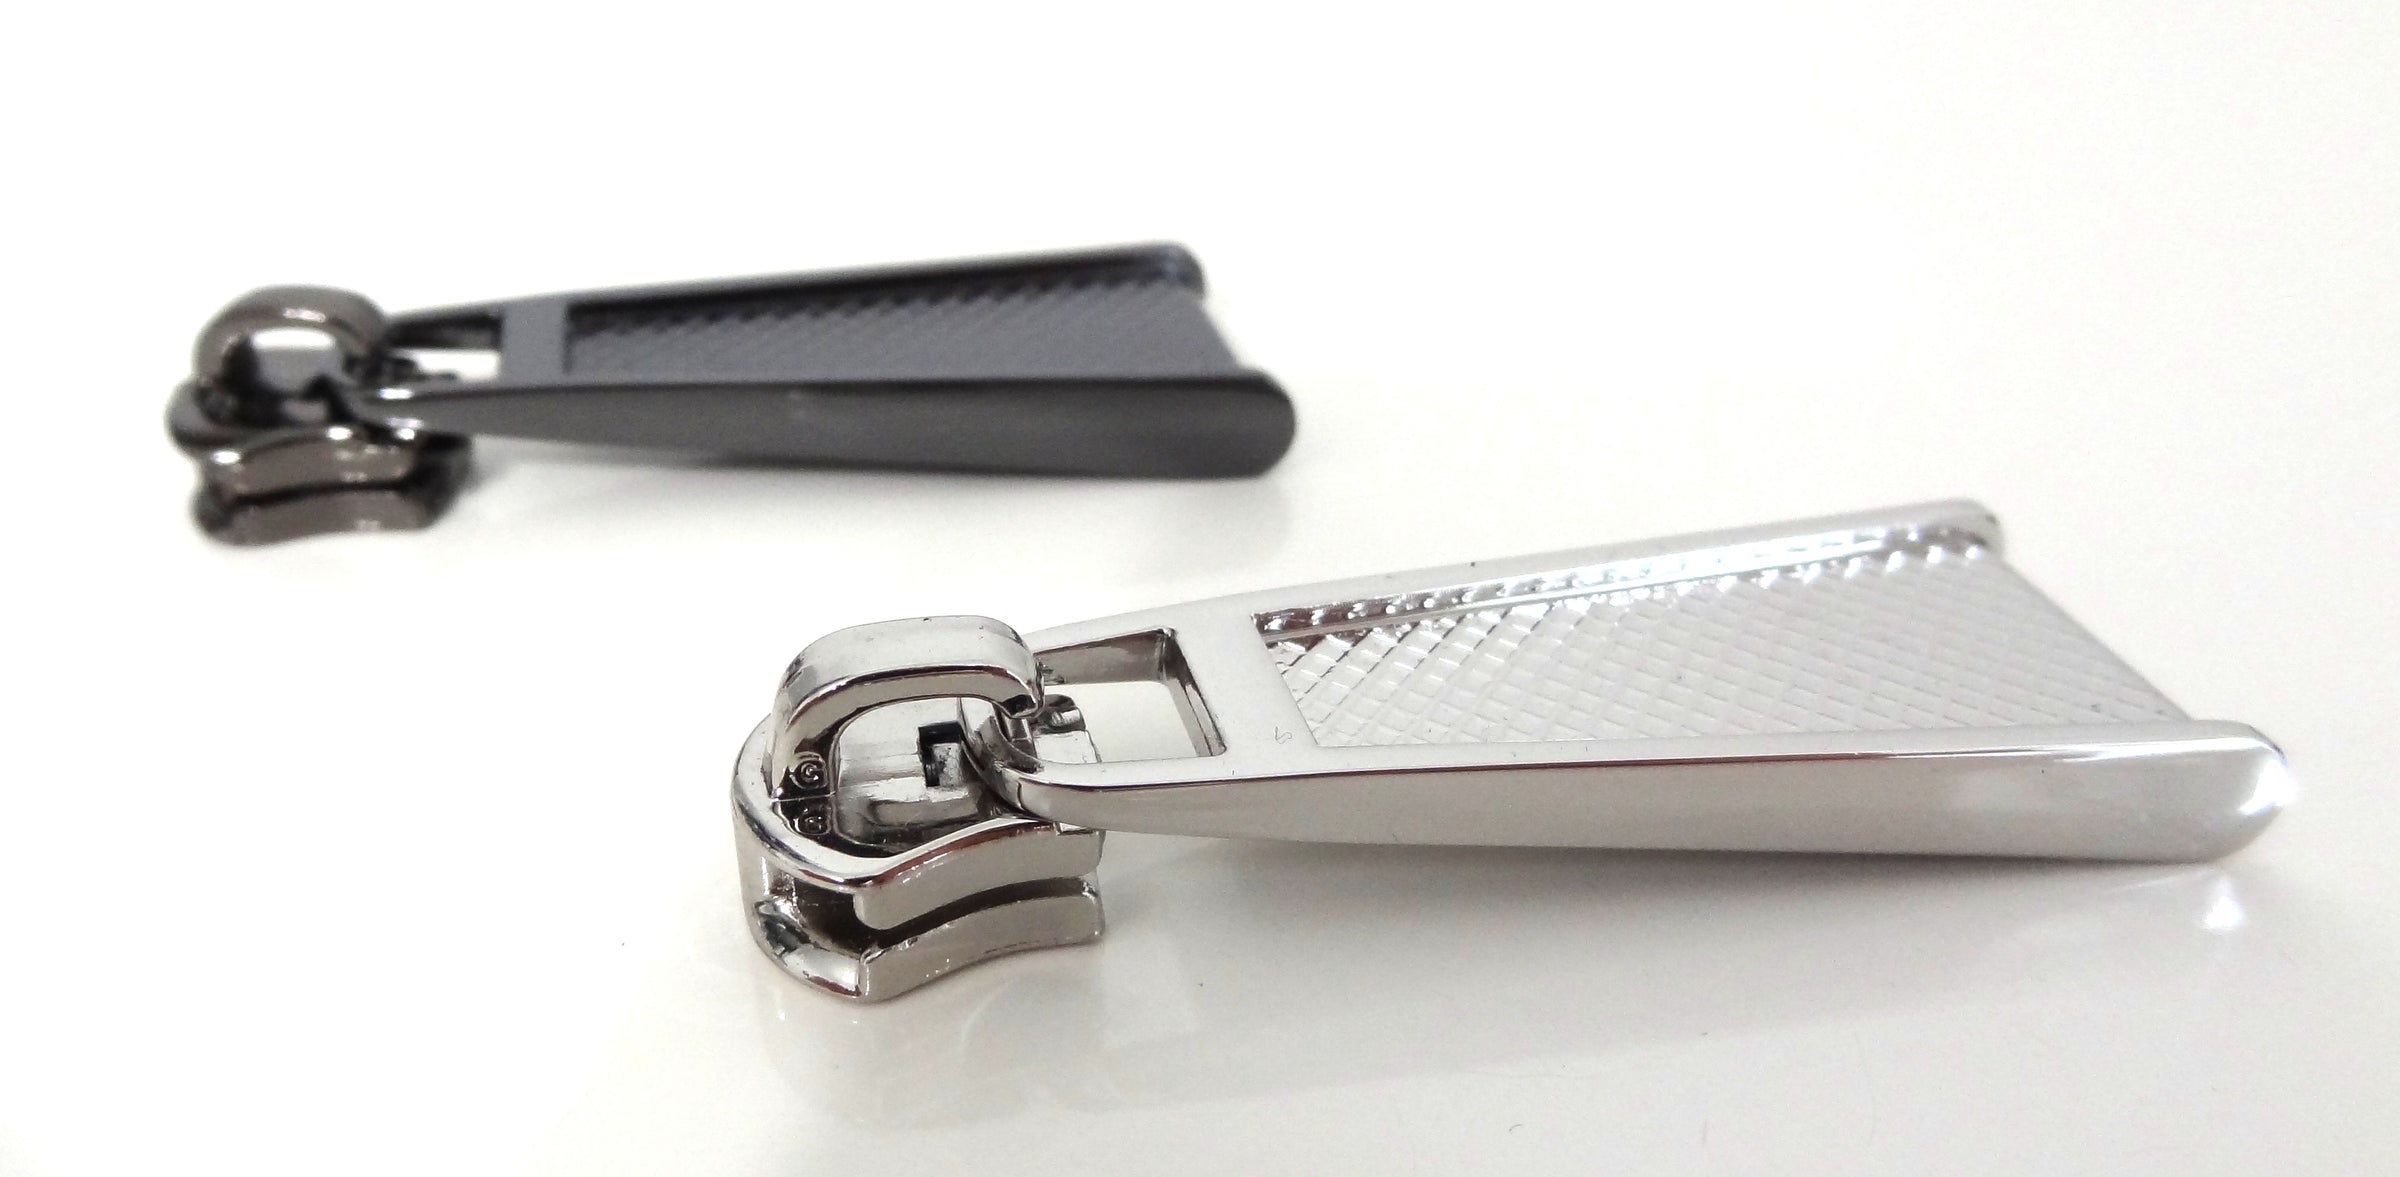 5 Zipper Slider and Pull - Metal Teeth - Style J – bringberry Handbag  Hardware and Designs